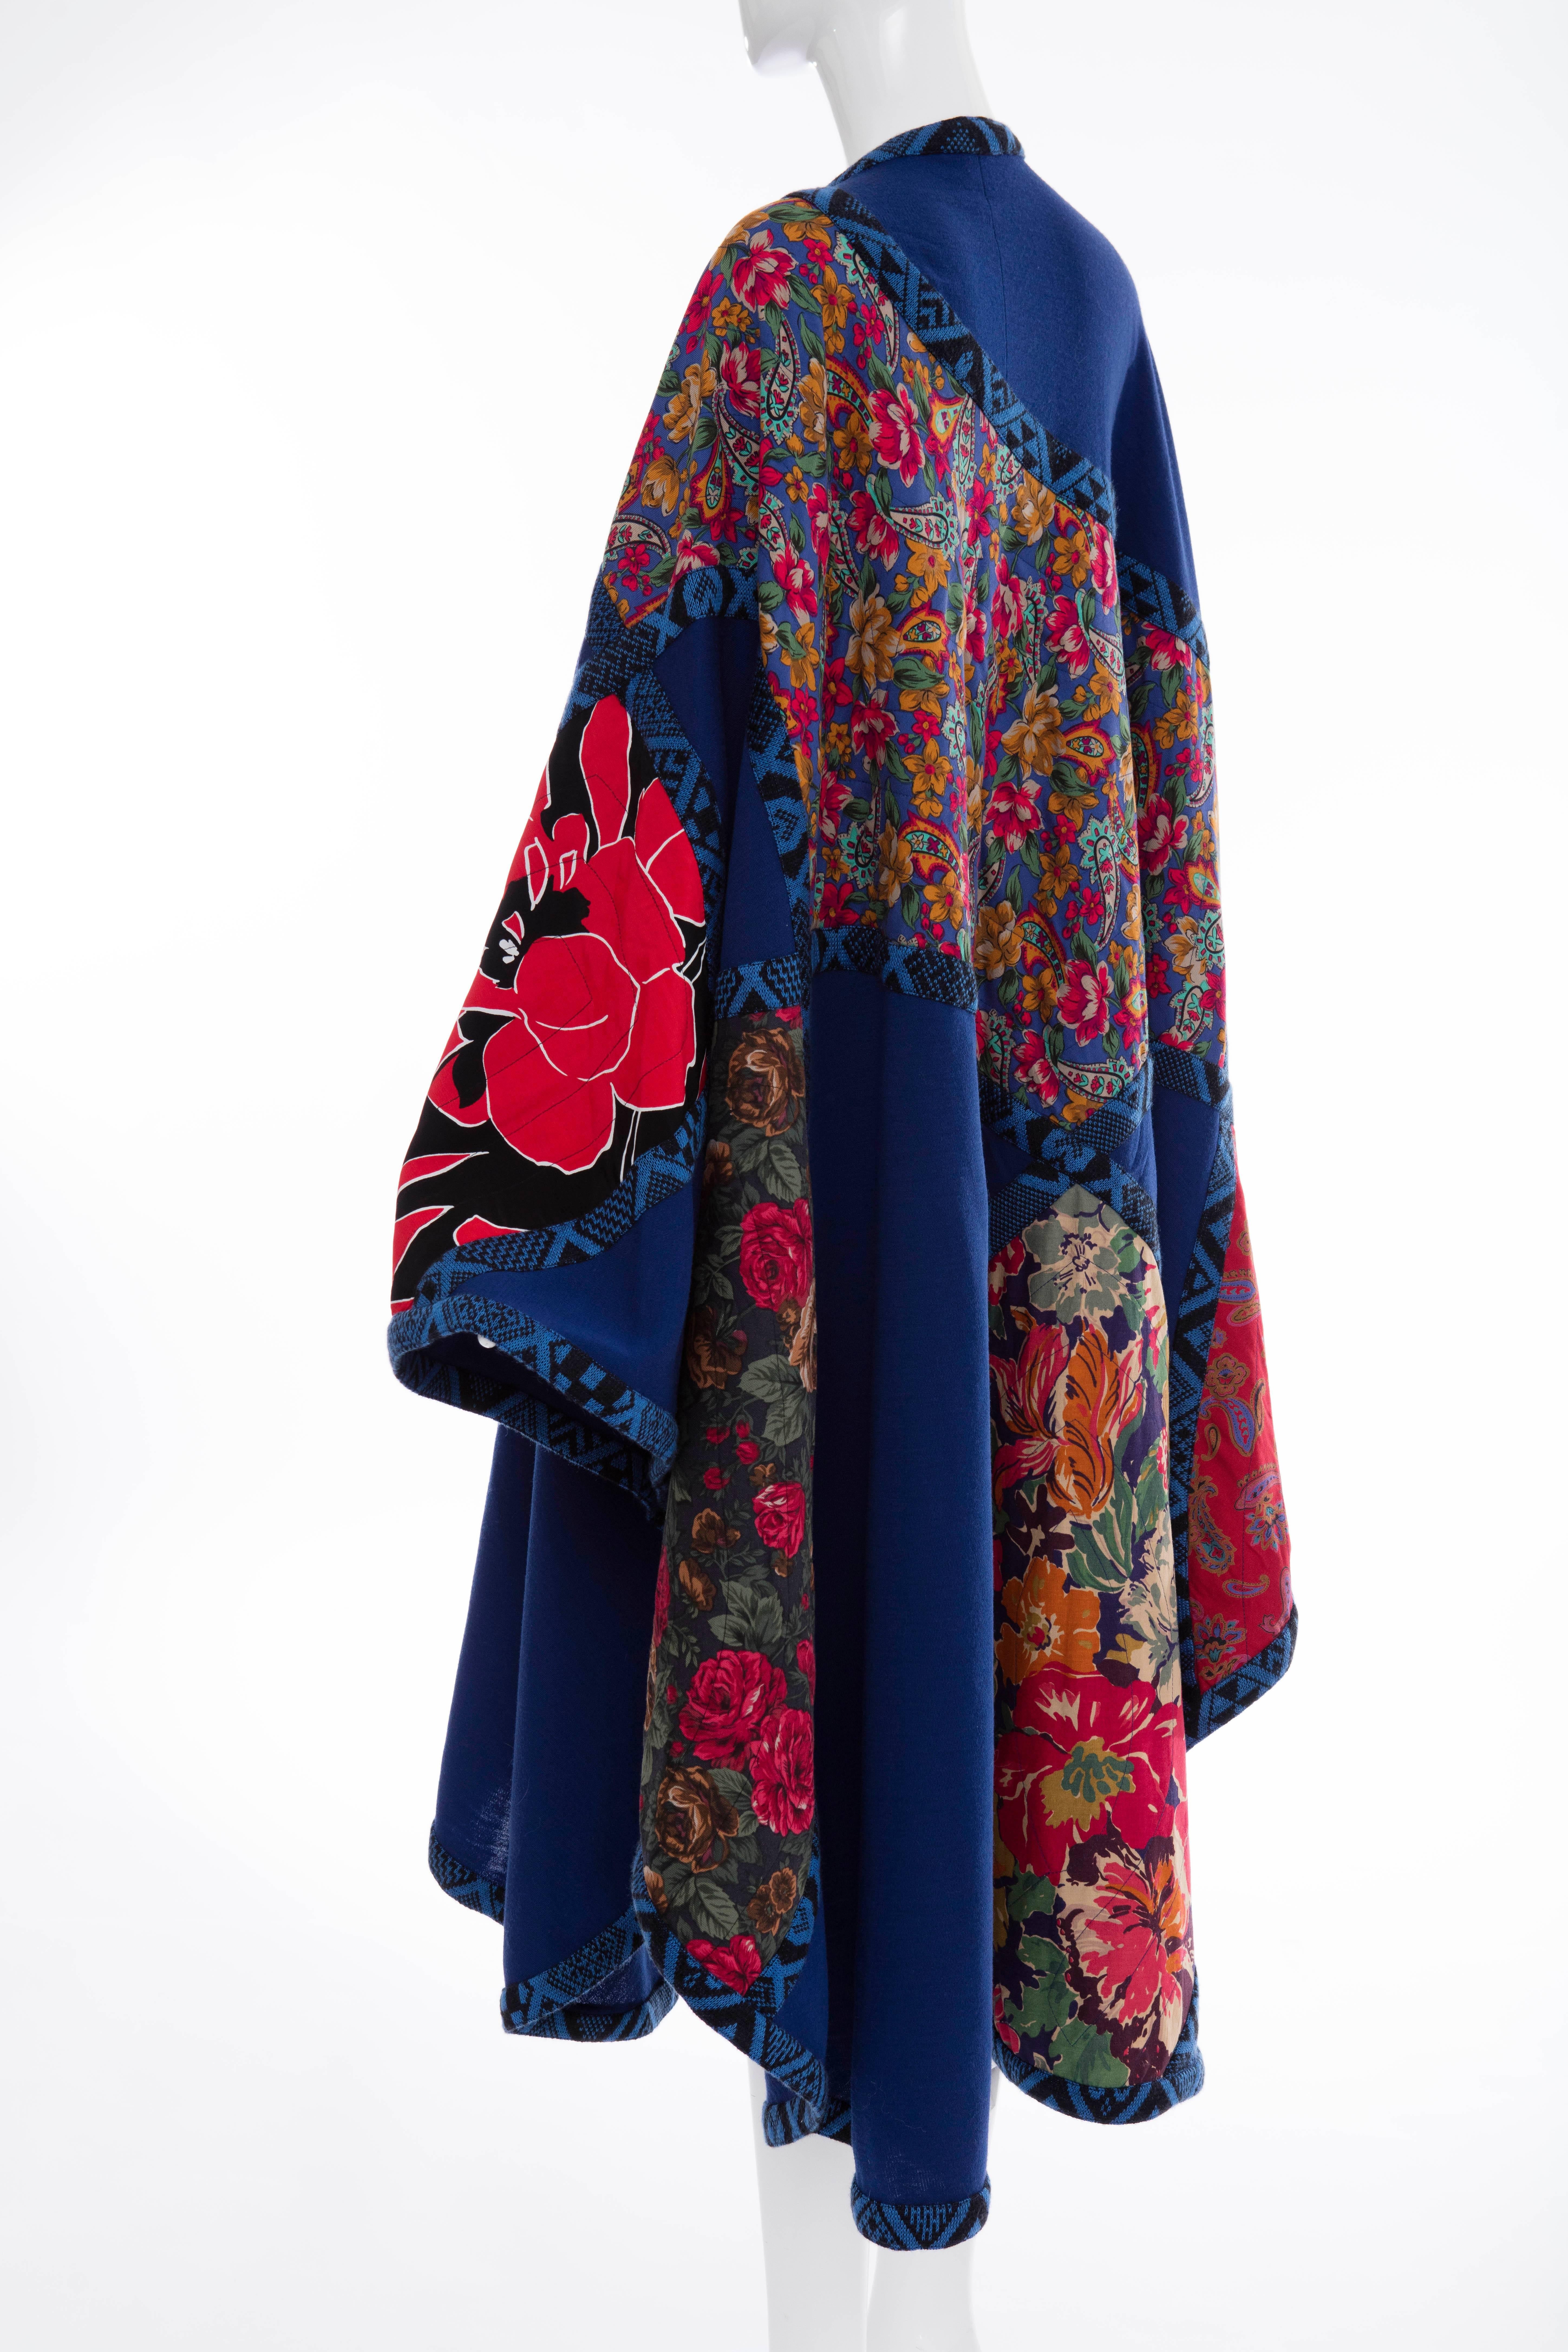 Koos Van Den Akker Royal Blue Cloak With Floral Quilted Patchwork, Circa 1980's 2